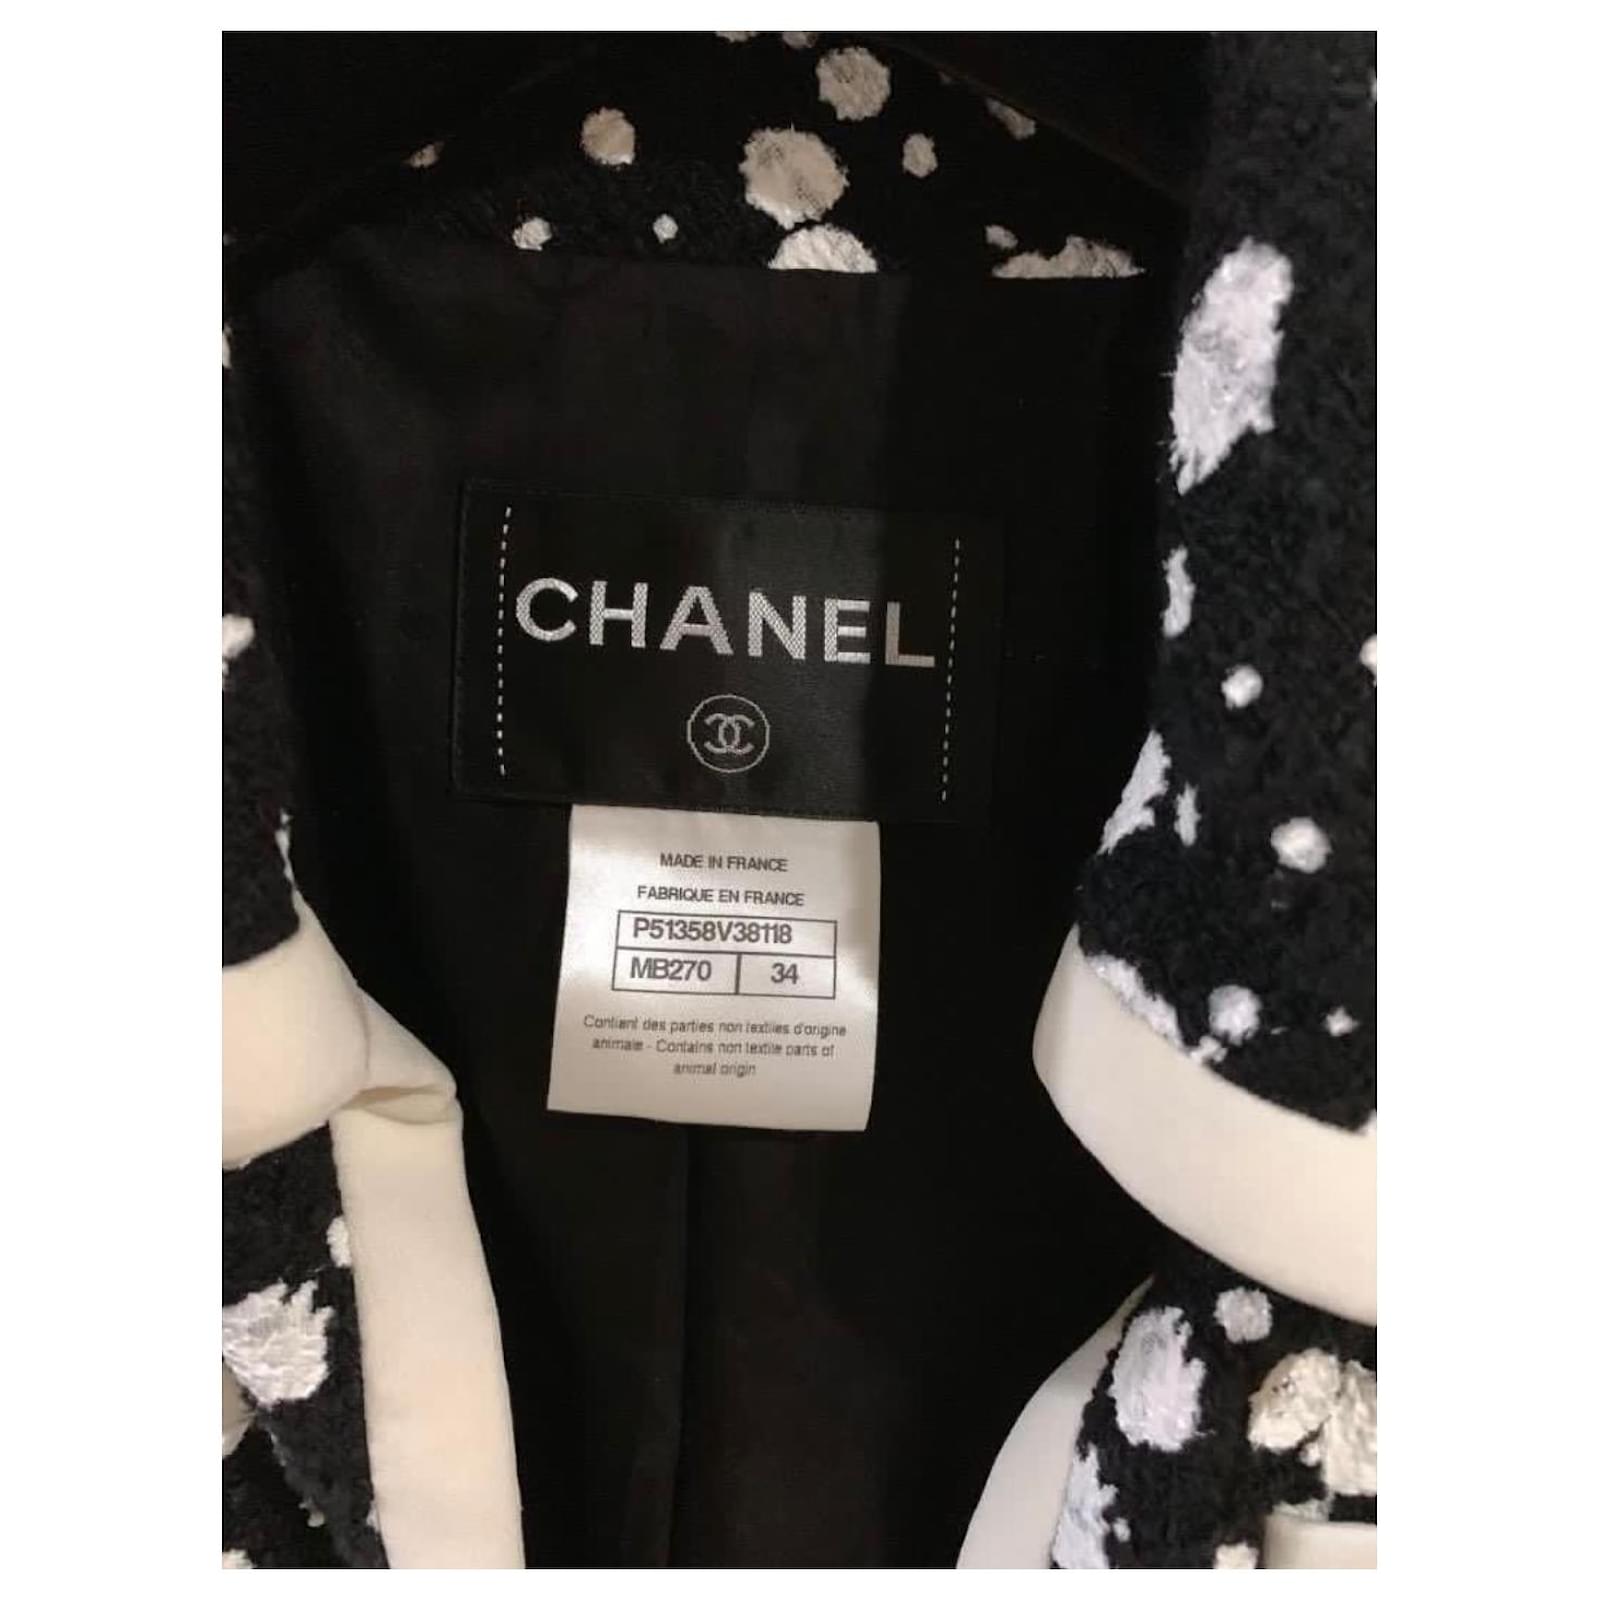 Chanel 2015 Dubai Resort Holograph Black amp White Jacket Pant Suit Size  42  eBay